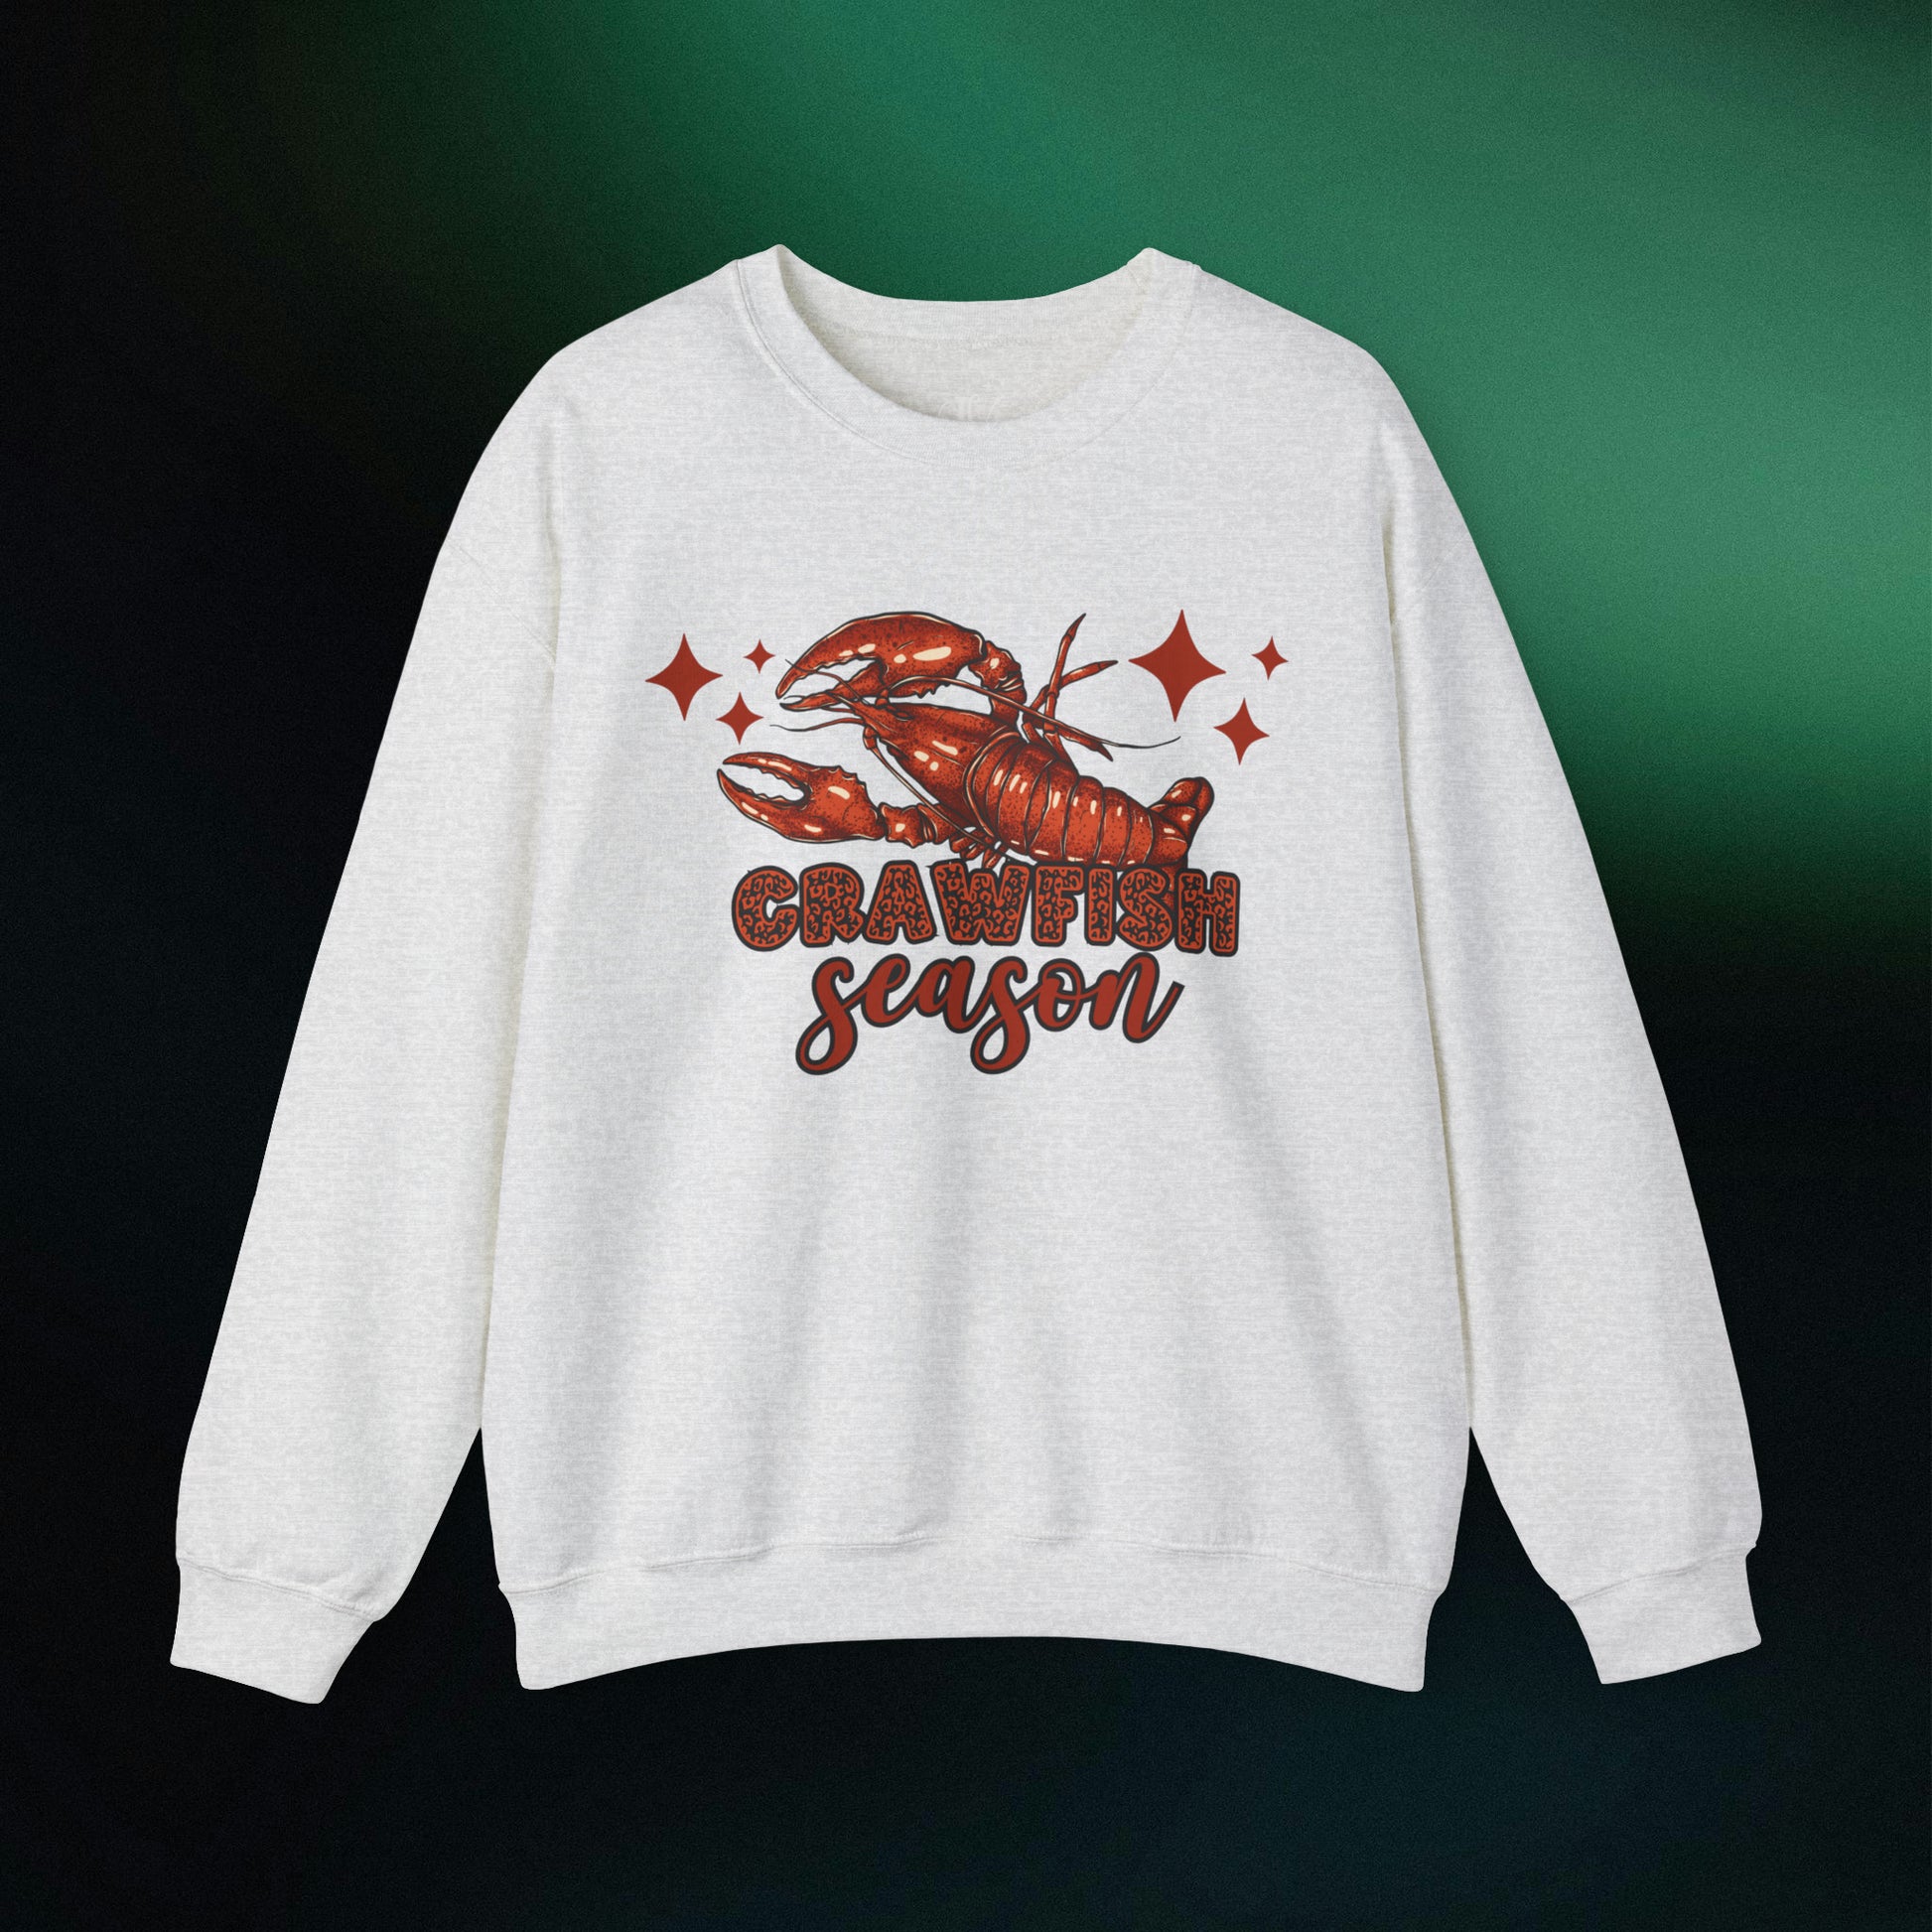 Celebrate Crawfish Season: Mardi Gras Sweatshirt, Crawfish Lovers Sweater, Louisiana Crew Tee | Crawfish Season Apparel - Embrace the Flavor and Fun of the Season with Stylish Crawfish-Themed Wear! Sweatshirt S Ash 